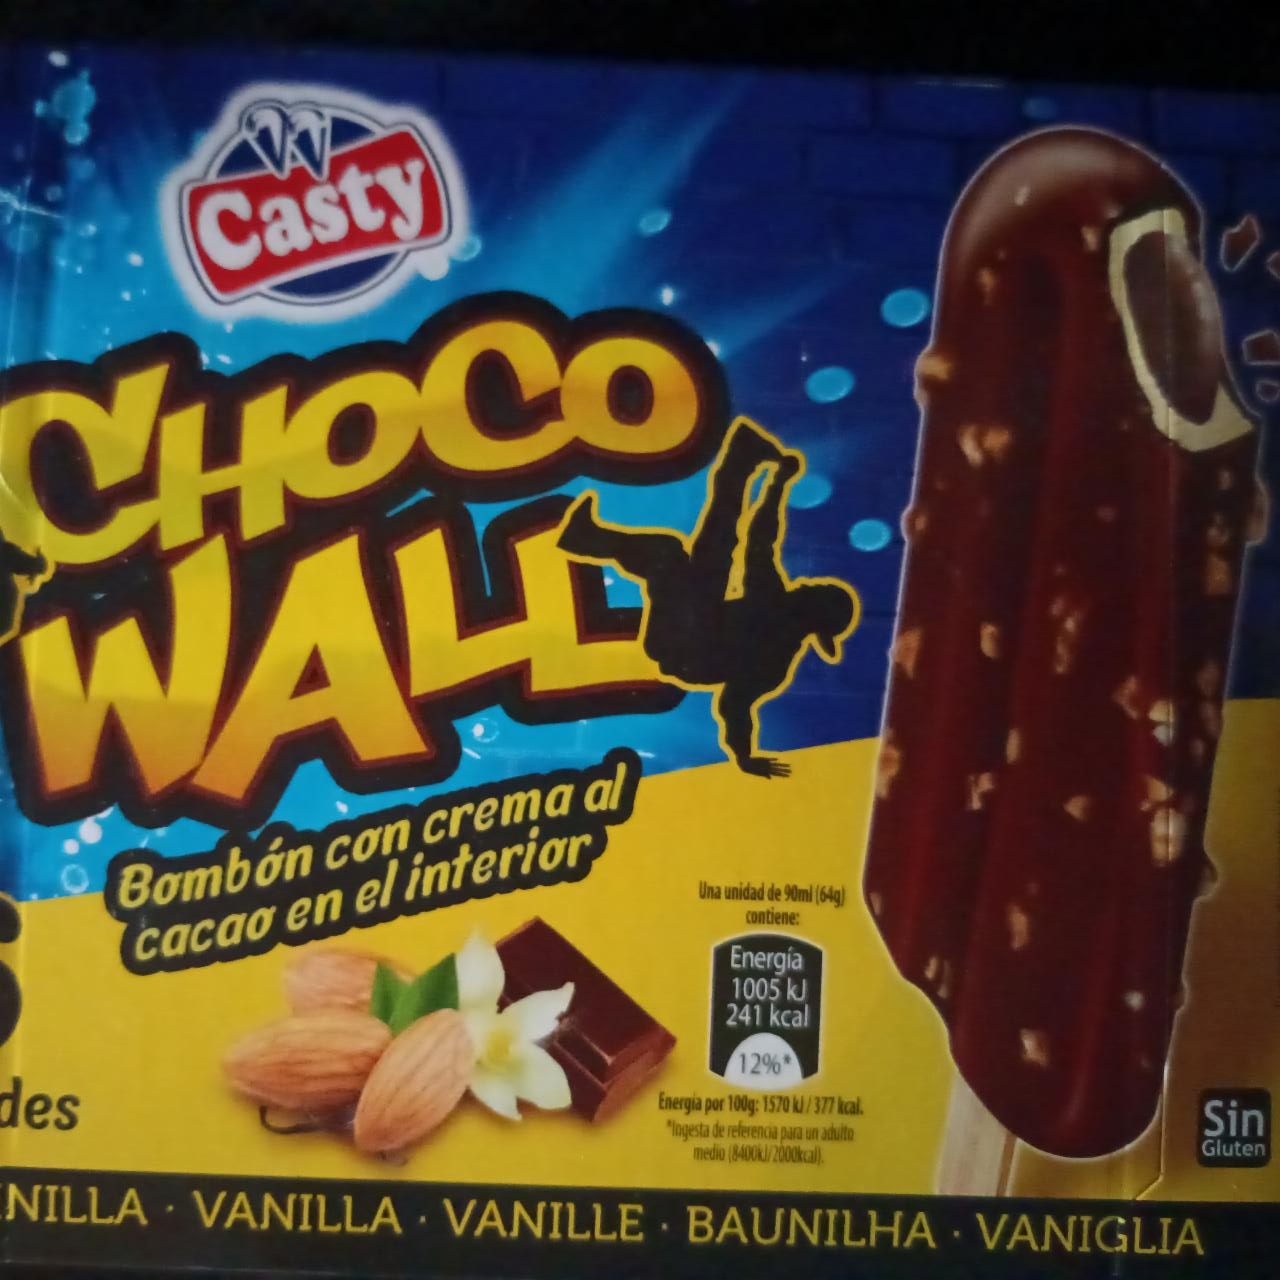 Fotografie - Choco wall Vanille Casty